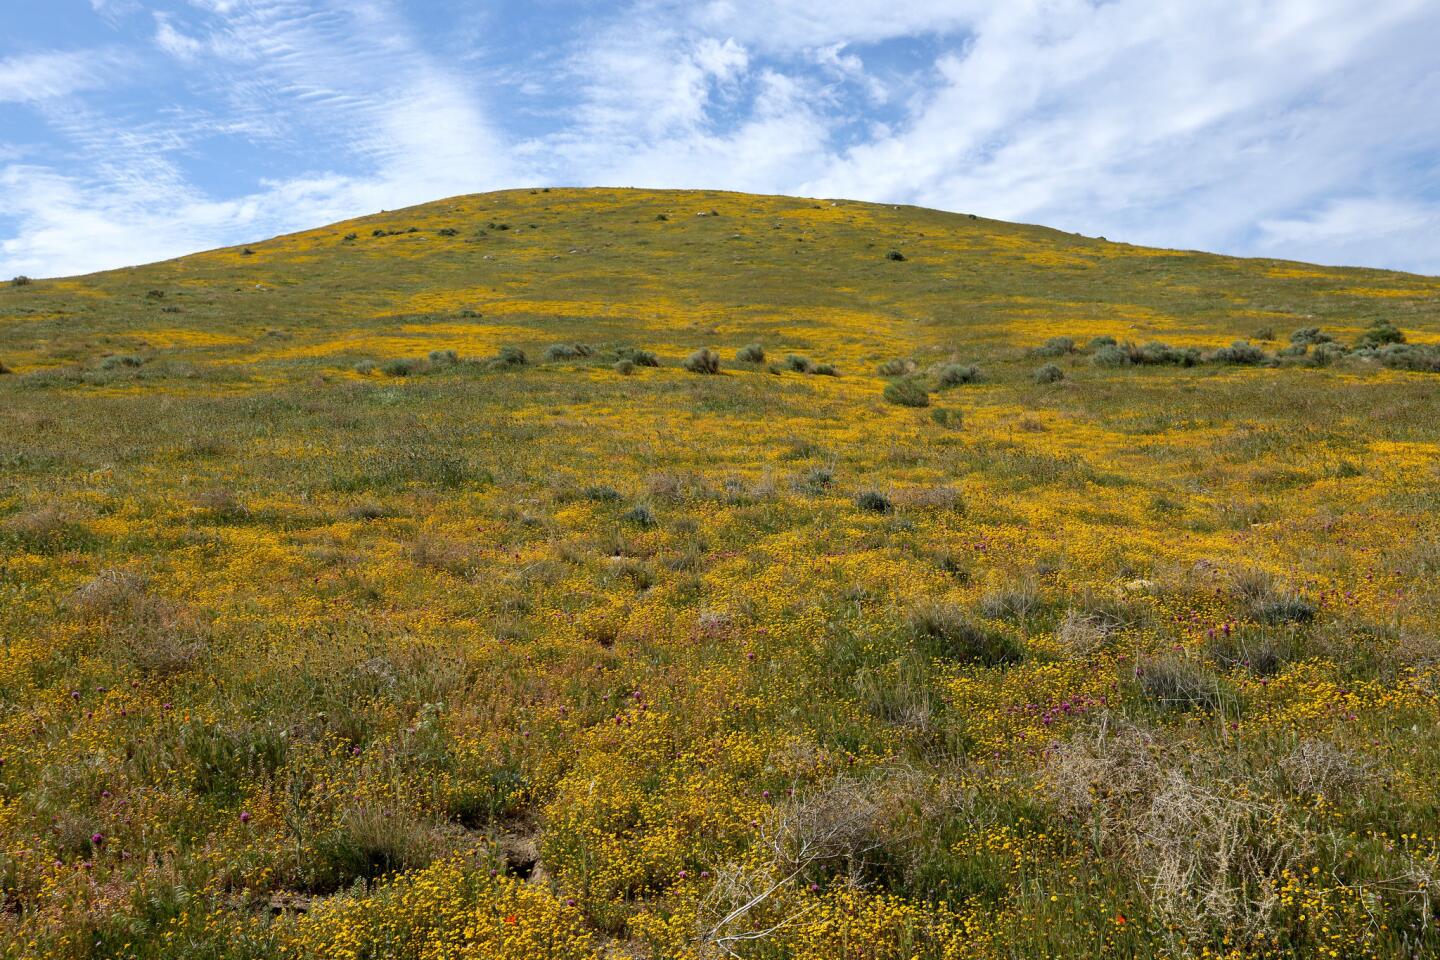 California Poppy Reserve in the Antelope Valley